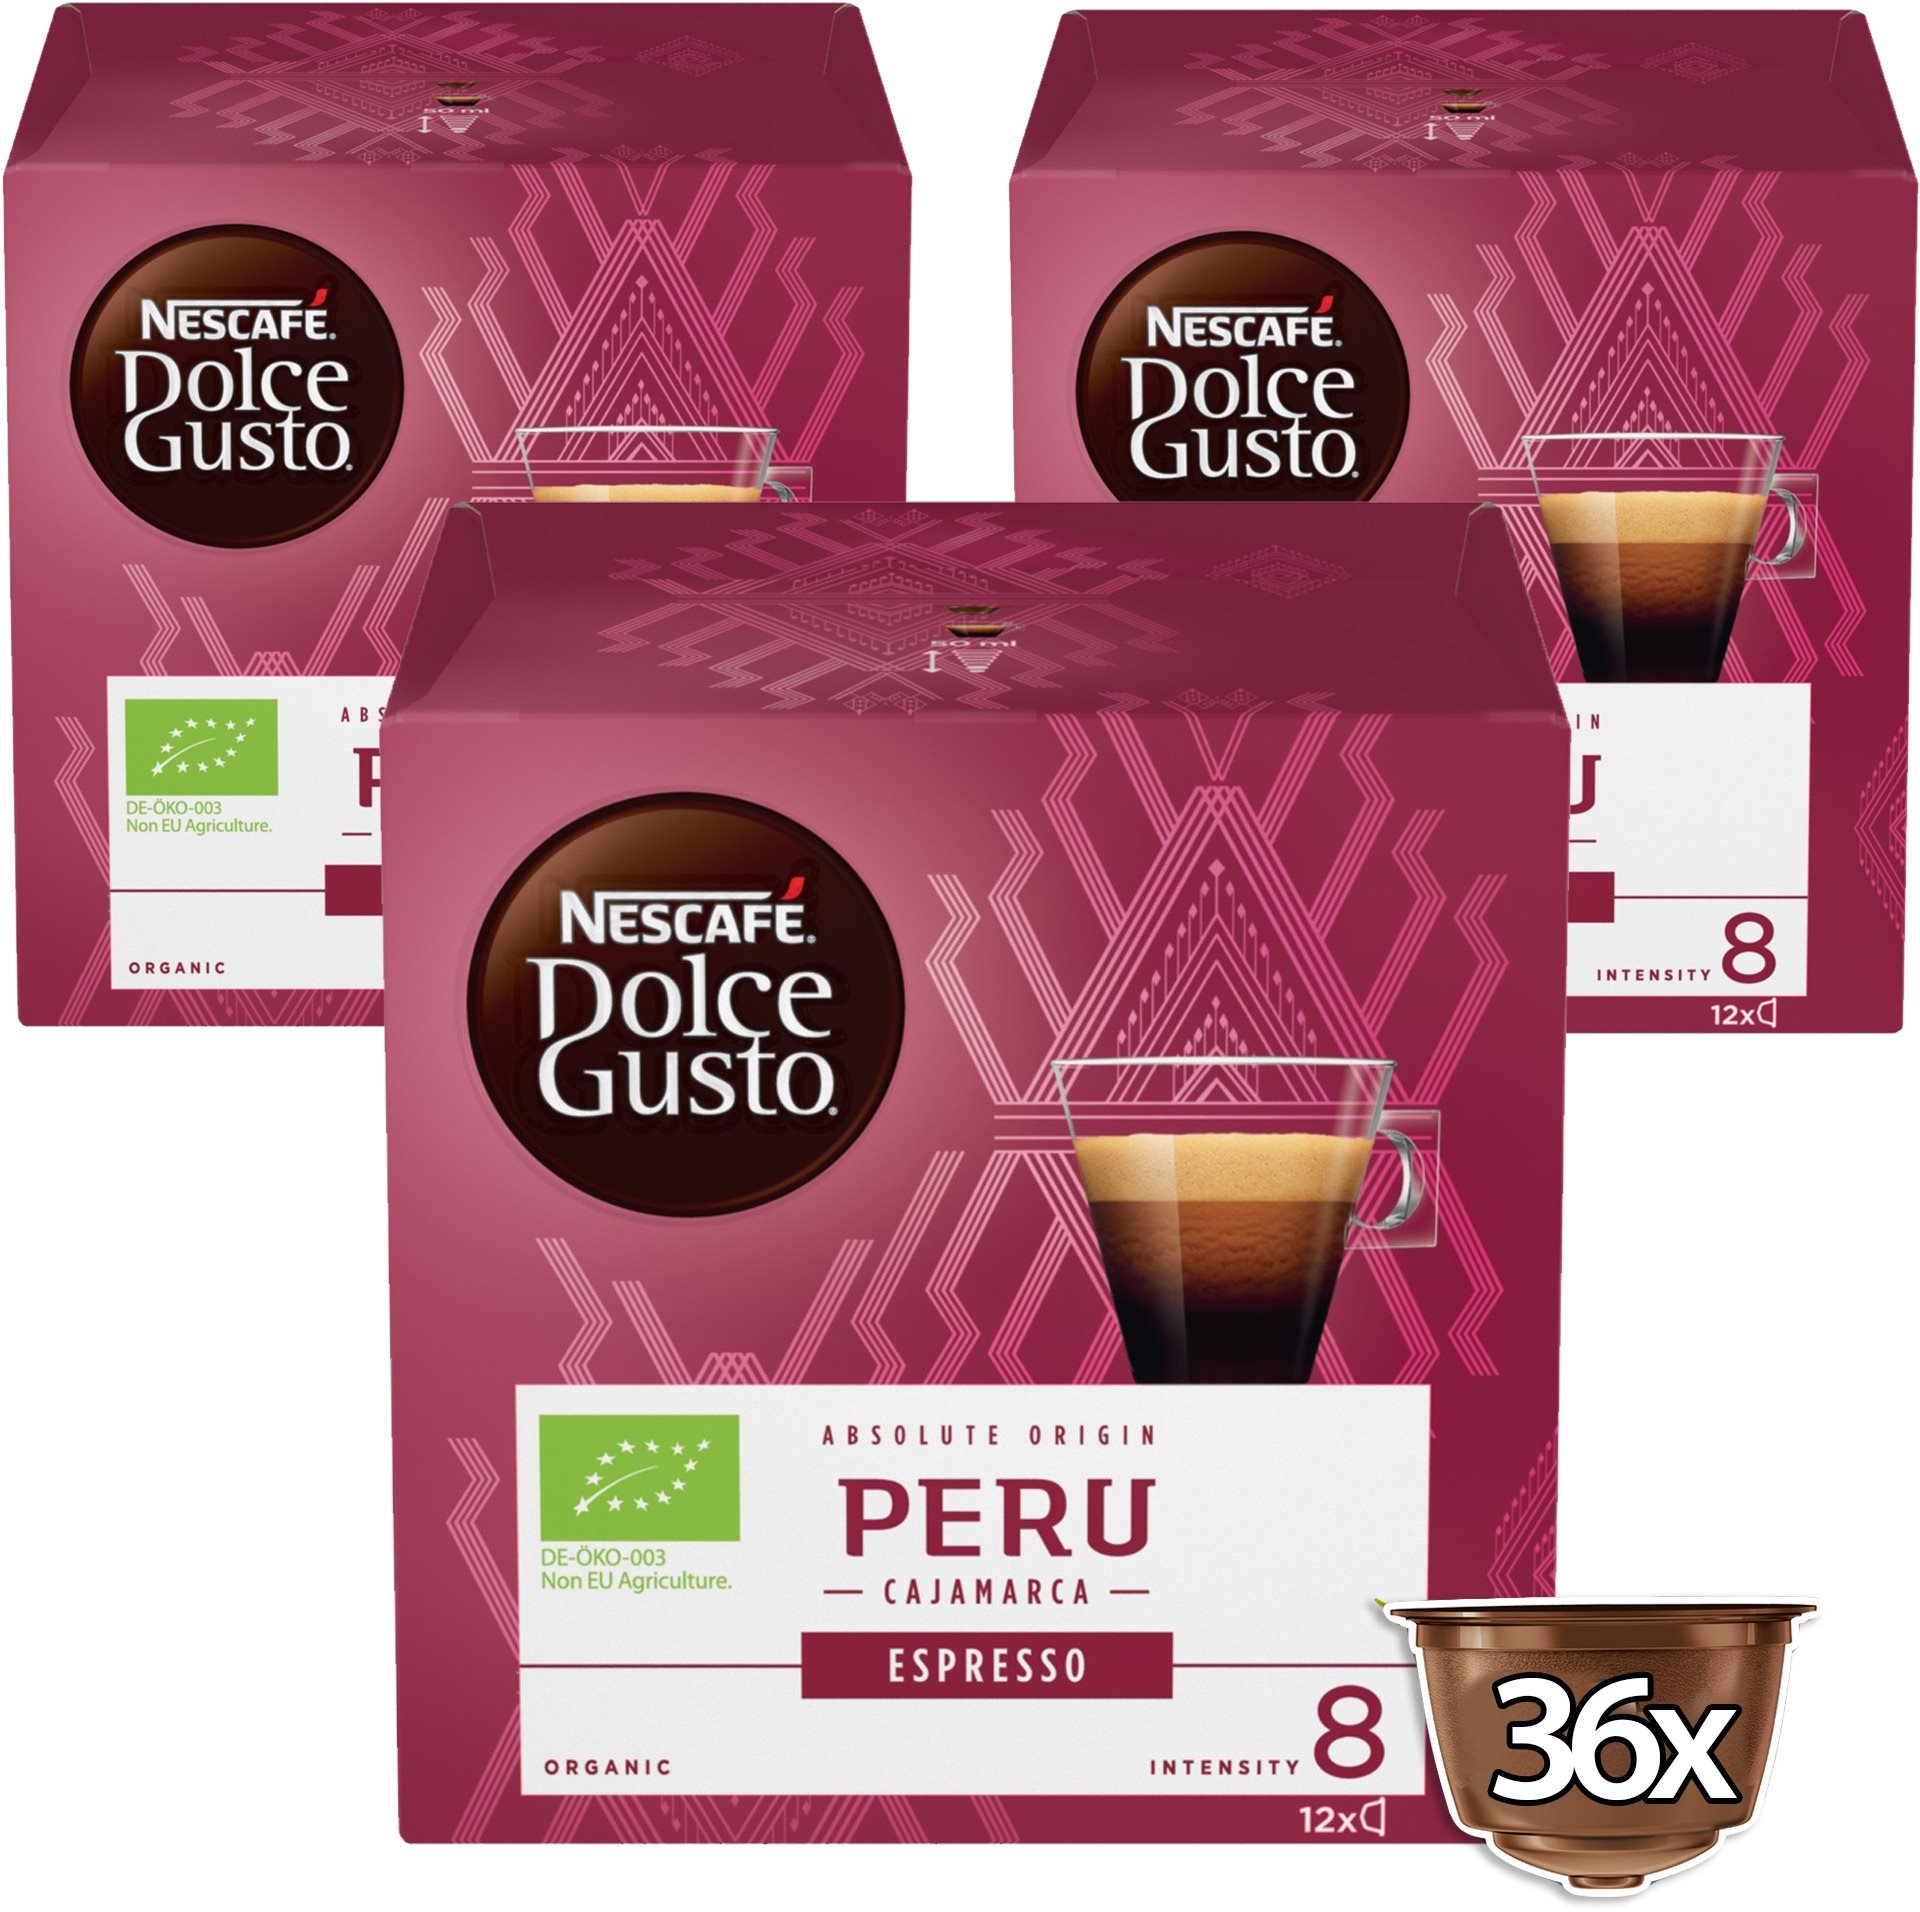 NESCAFÉ Dolce Gusto Peru Cajamarca Espresso, 3 csomag